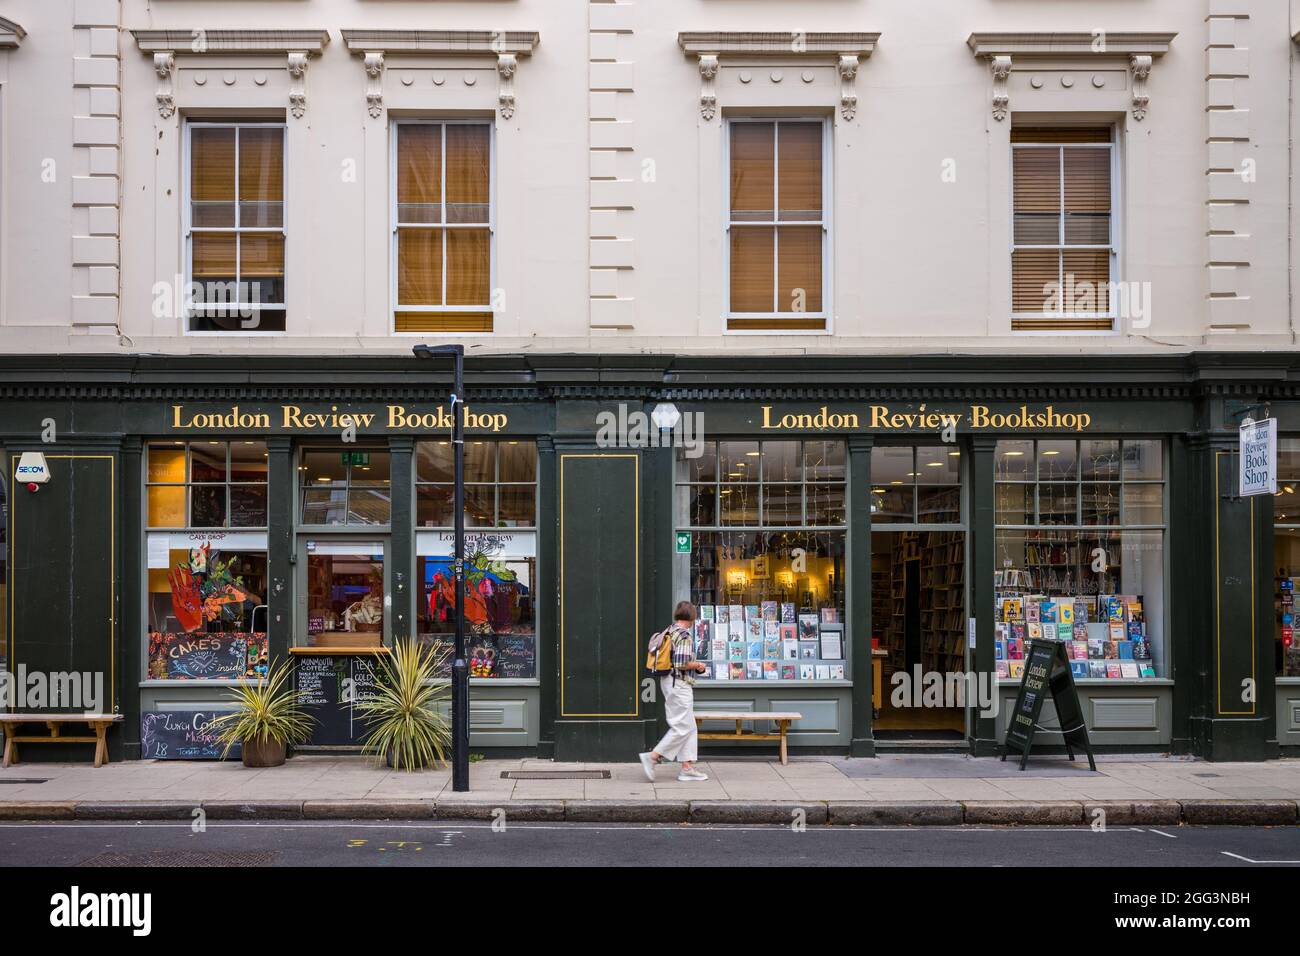 London Review Bookshop und Cake Shop / Cafe im 14 Bury Place Bloomsbury London - London Review of Books Bookstore. LRB Bookshop & Cafe London. Stockfoto